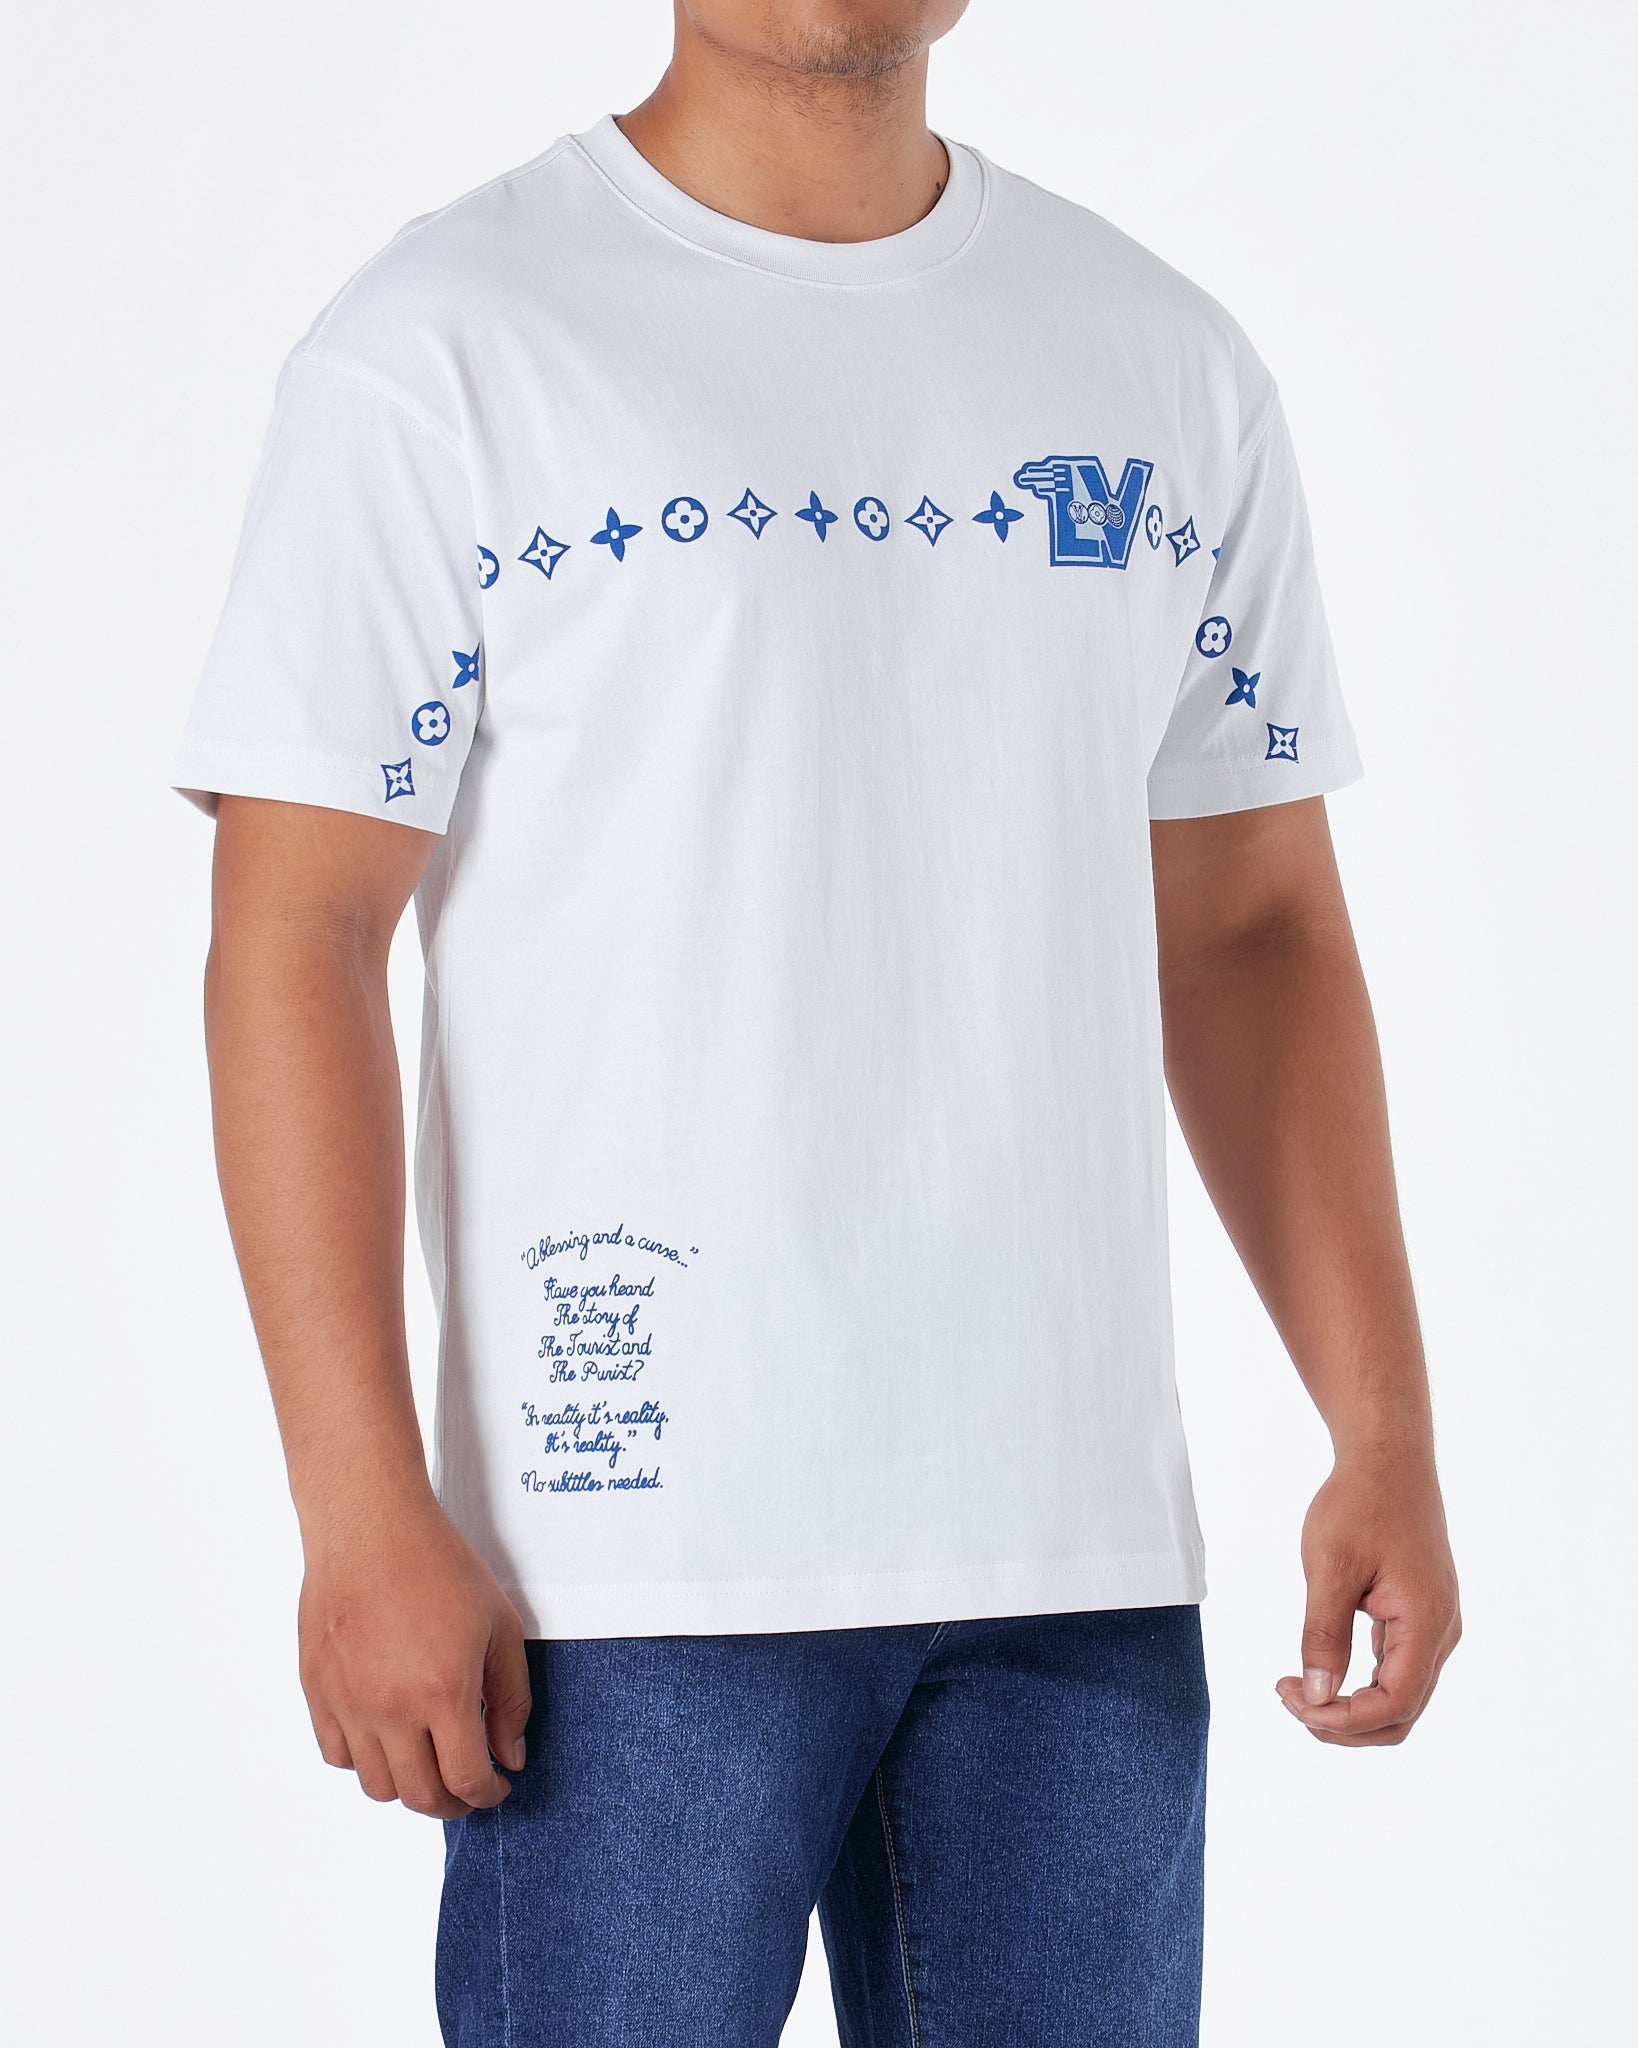 LV Logo Printed Men T-Shirt 49.90 - MOI OUTFIT